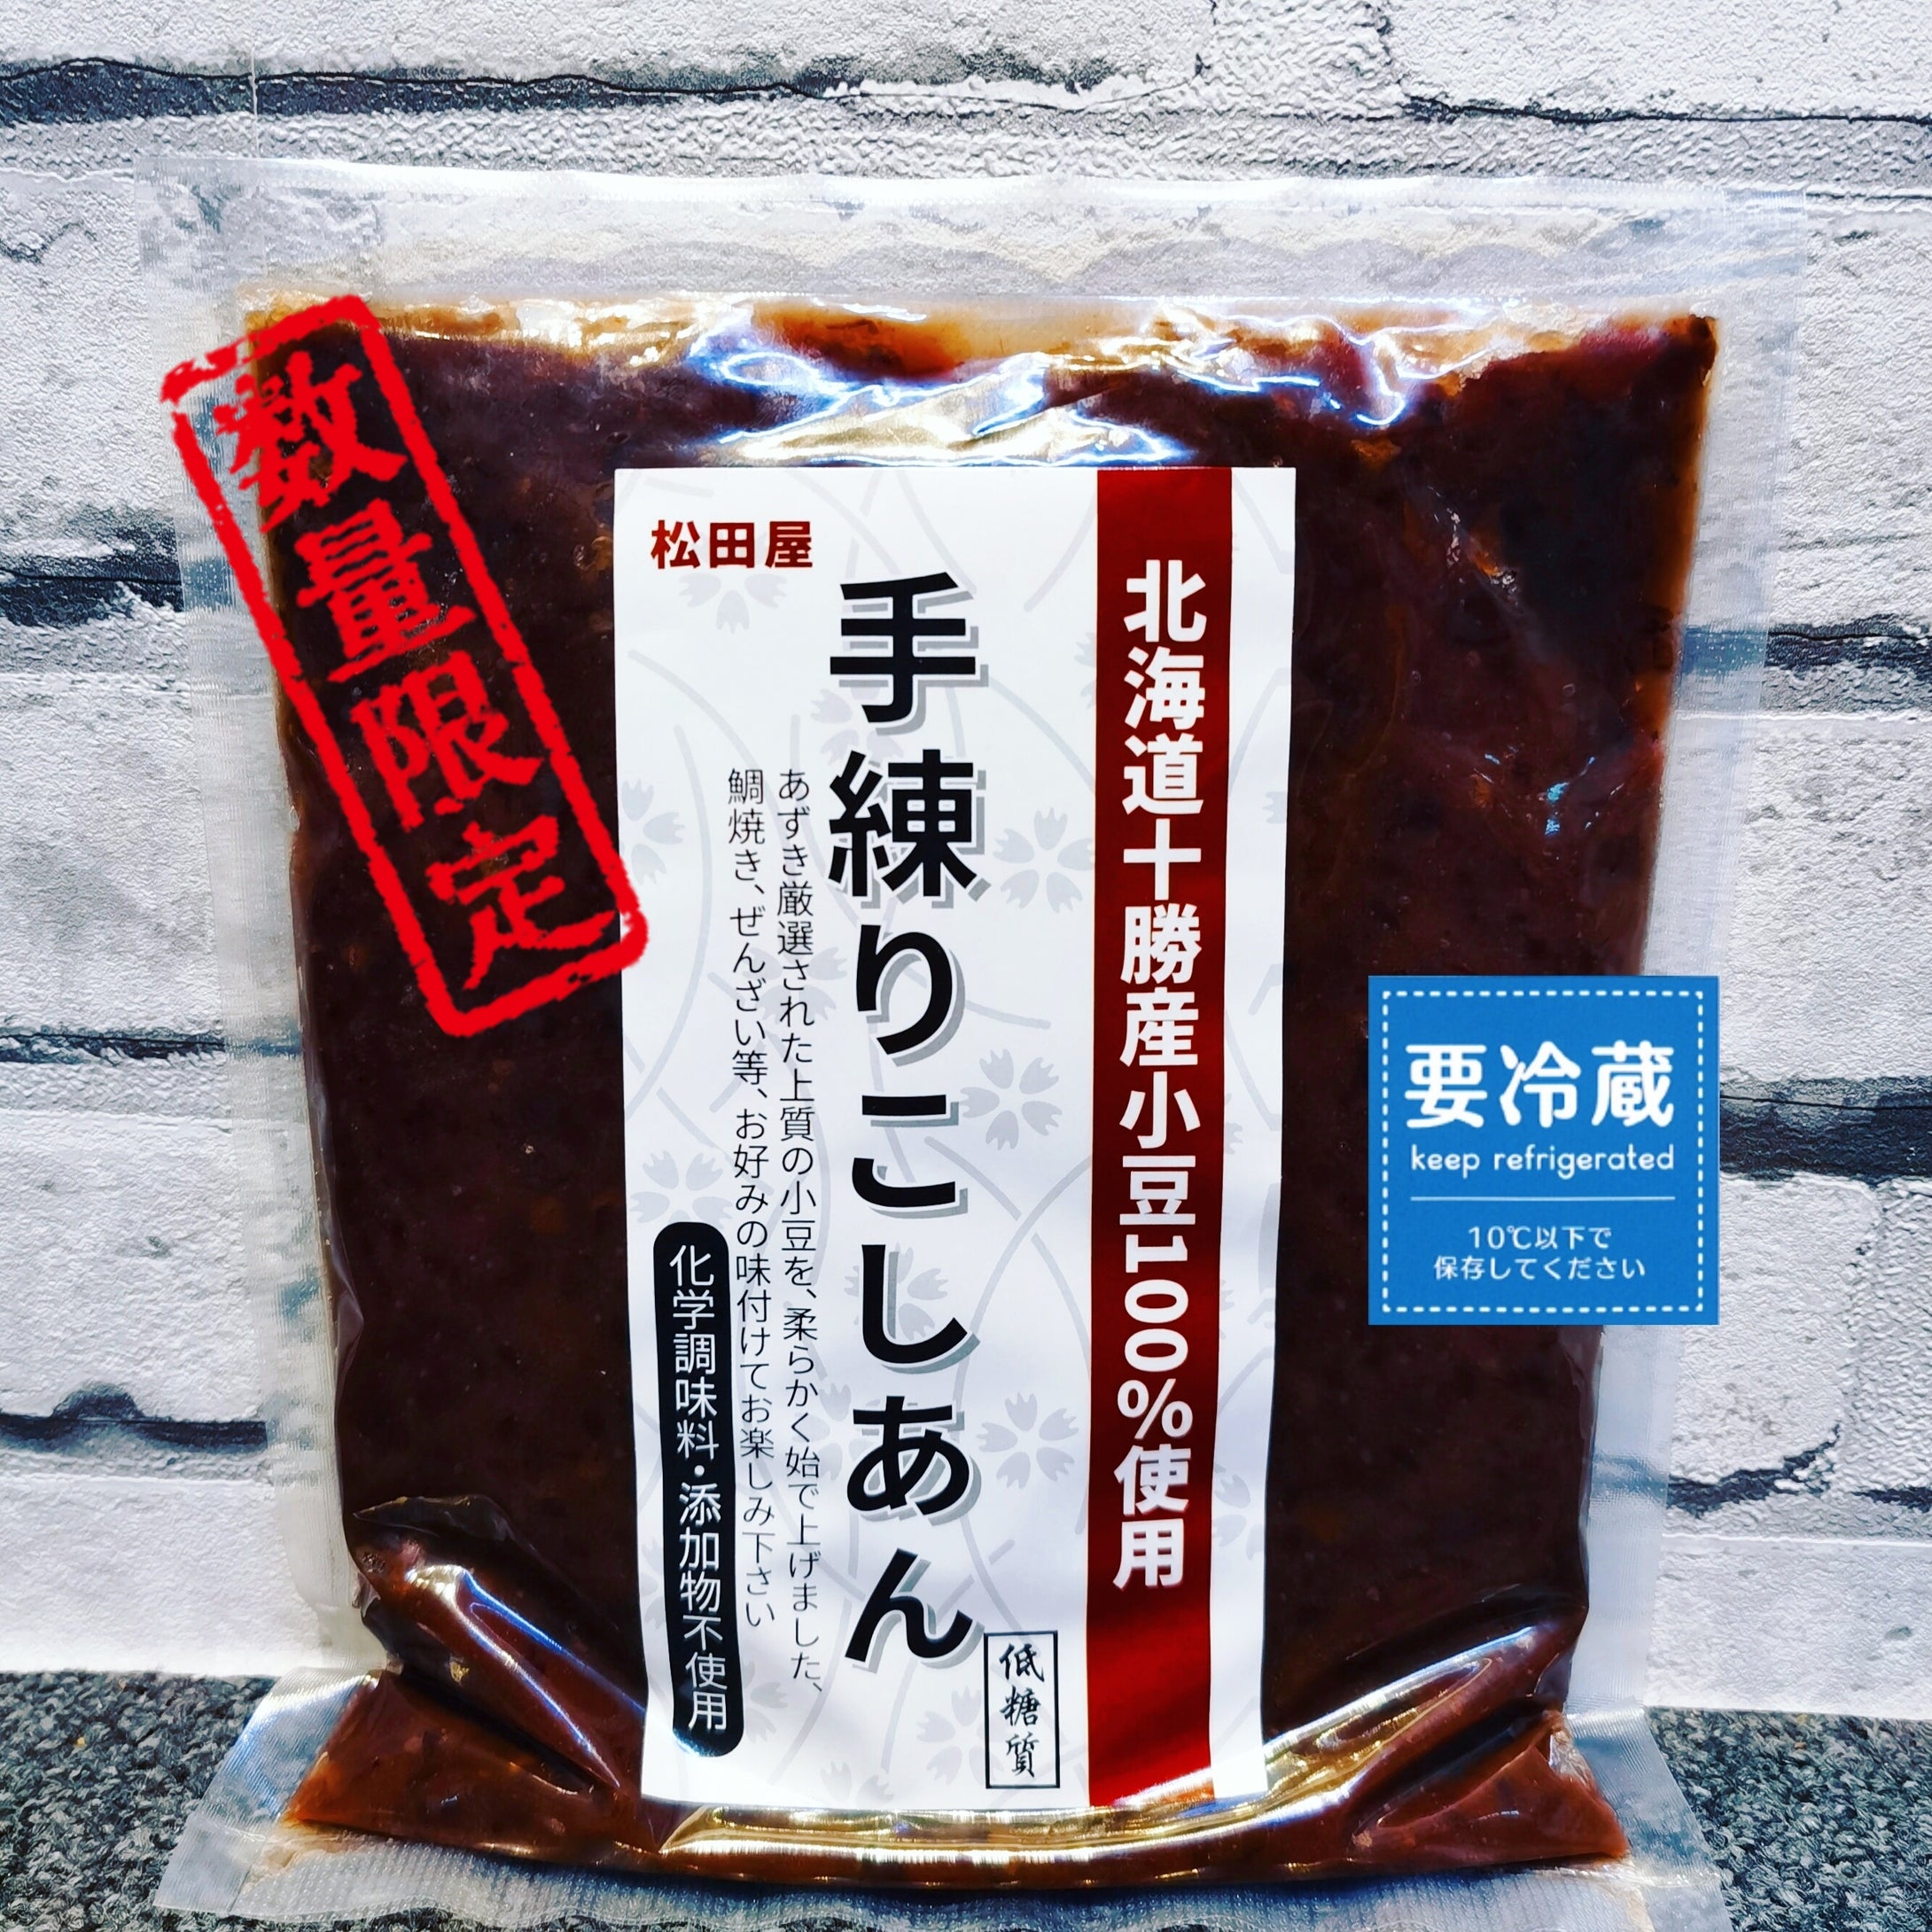 Matsuda-ya Chunky Red Bean Paste 